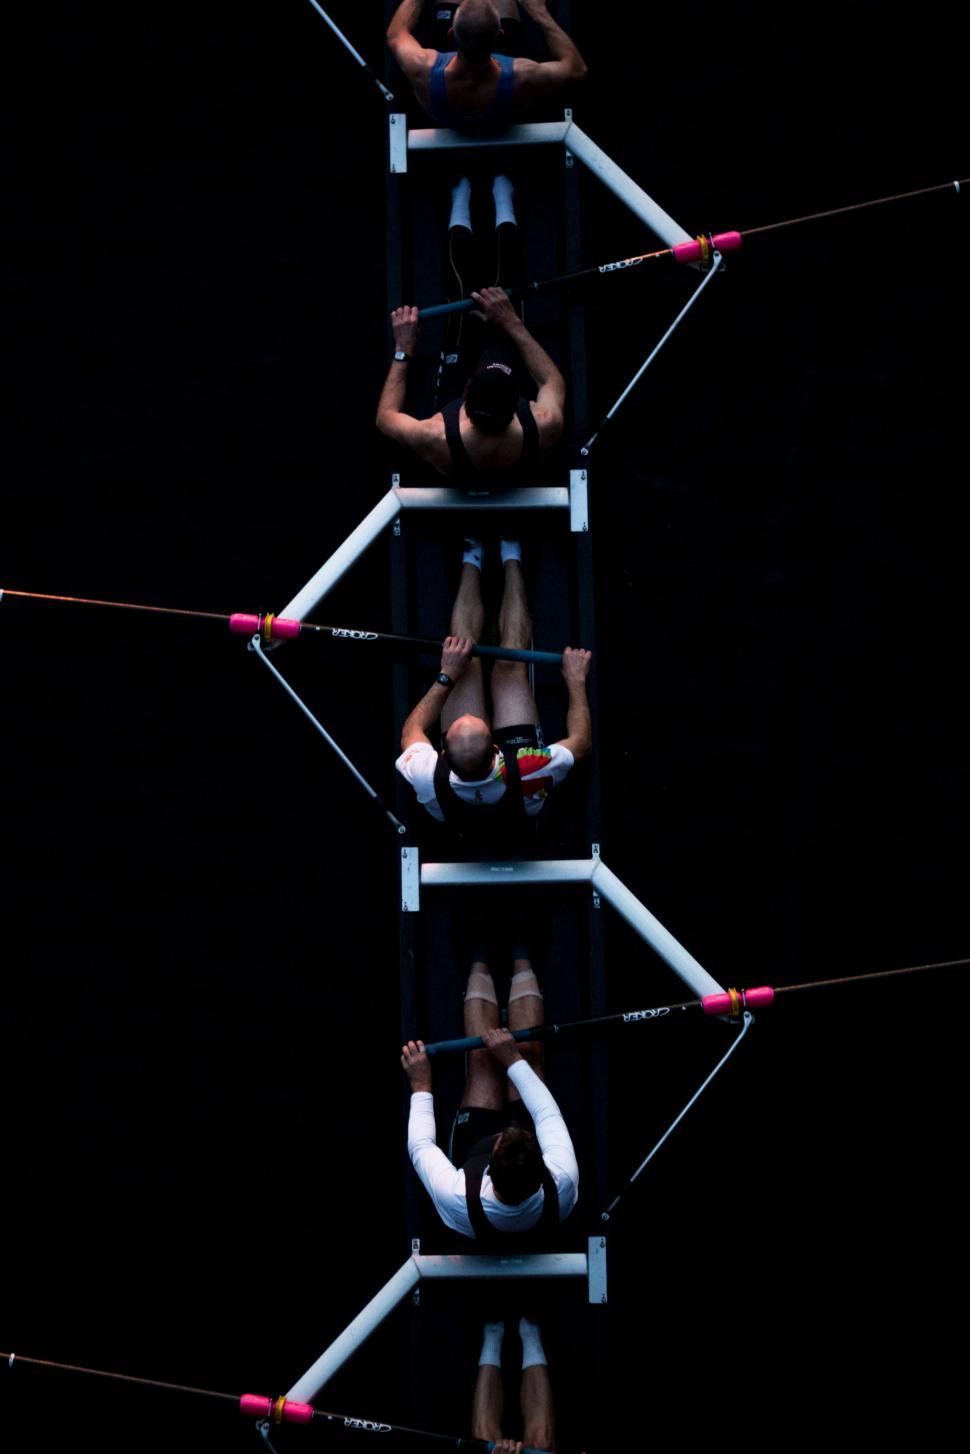 Free Image of Women Performing Aerial Acrobatic Tricks 